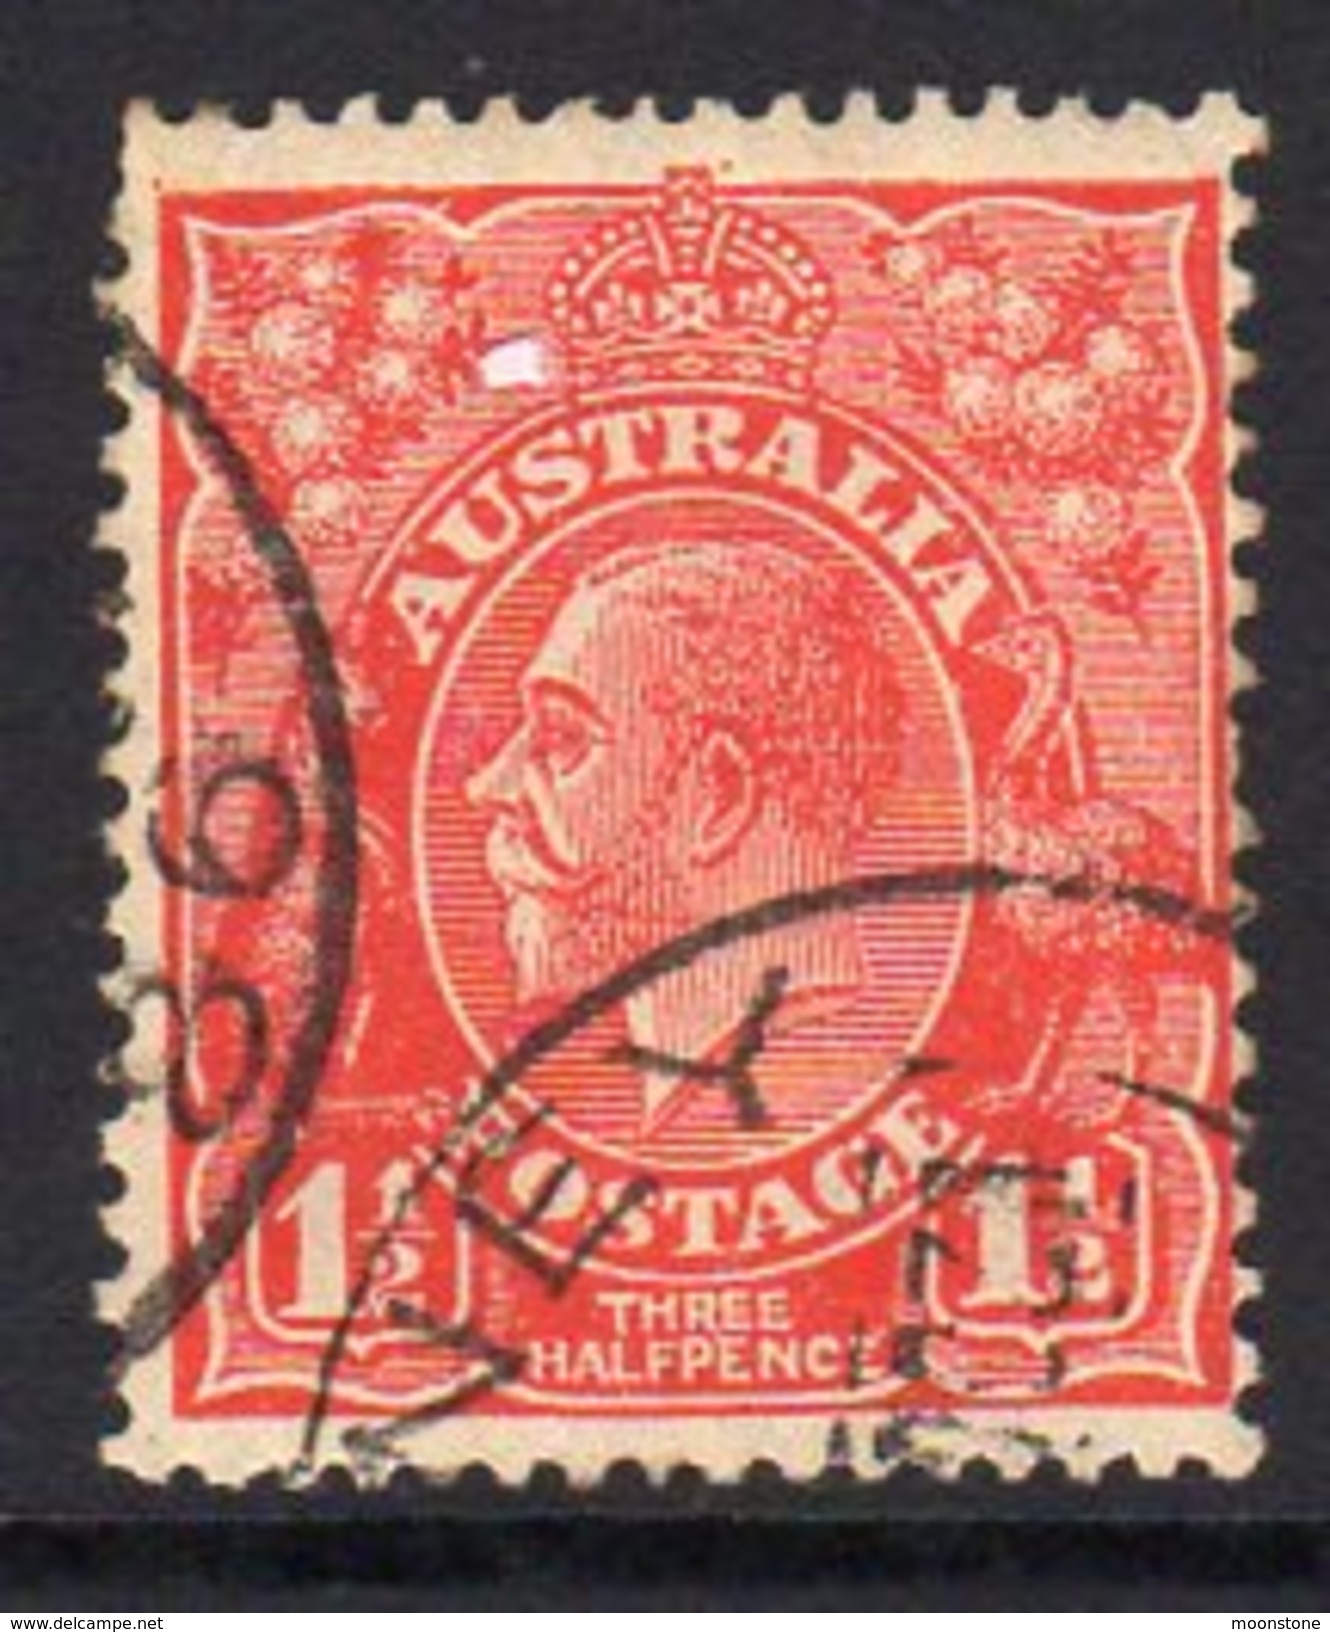 Australia 1926-30 1½d Scarlet GV Head, Wmk. 7, Perf. 14, Used (SG87) - Oblitérés